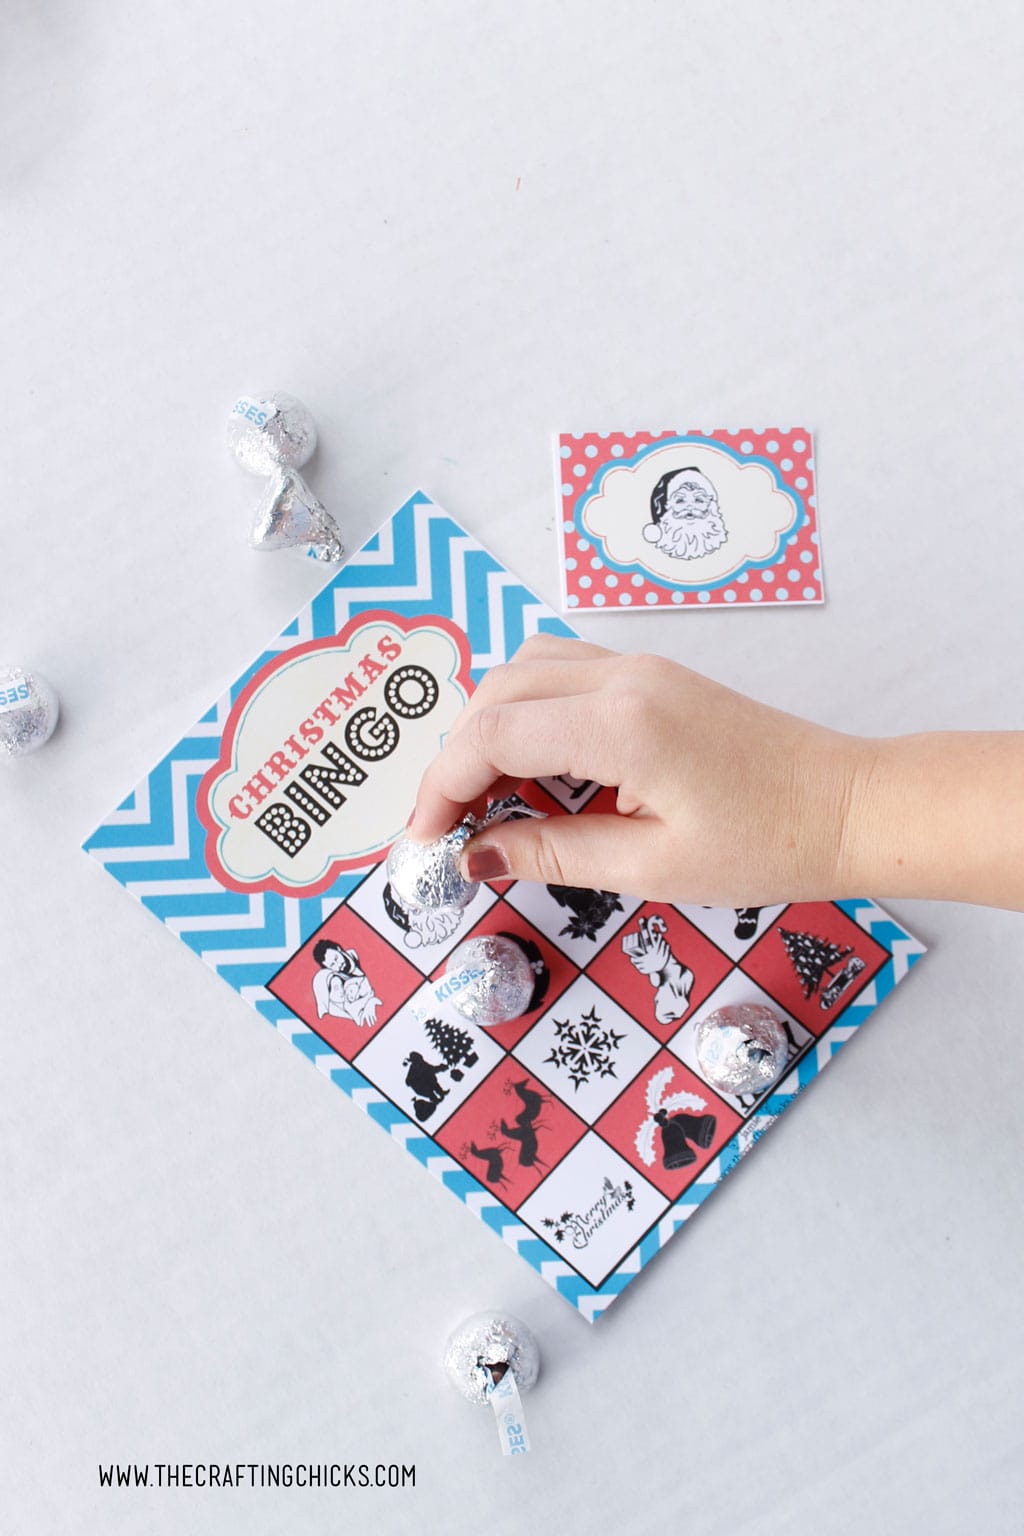 Free Printable Christmas Bingo Game with child's hand playing the game with Hershey Kisses.